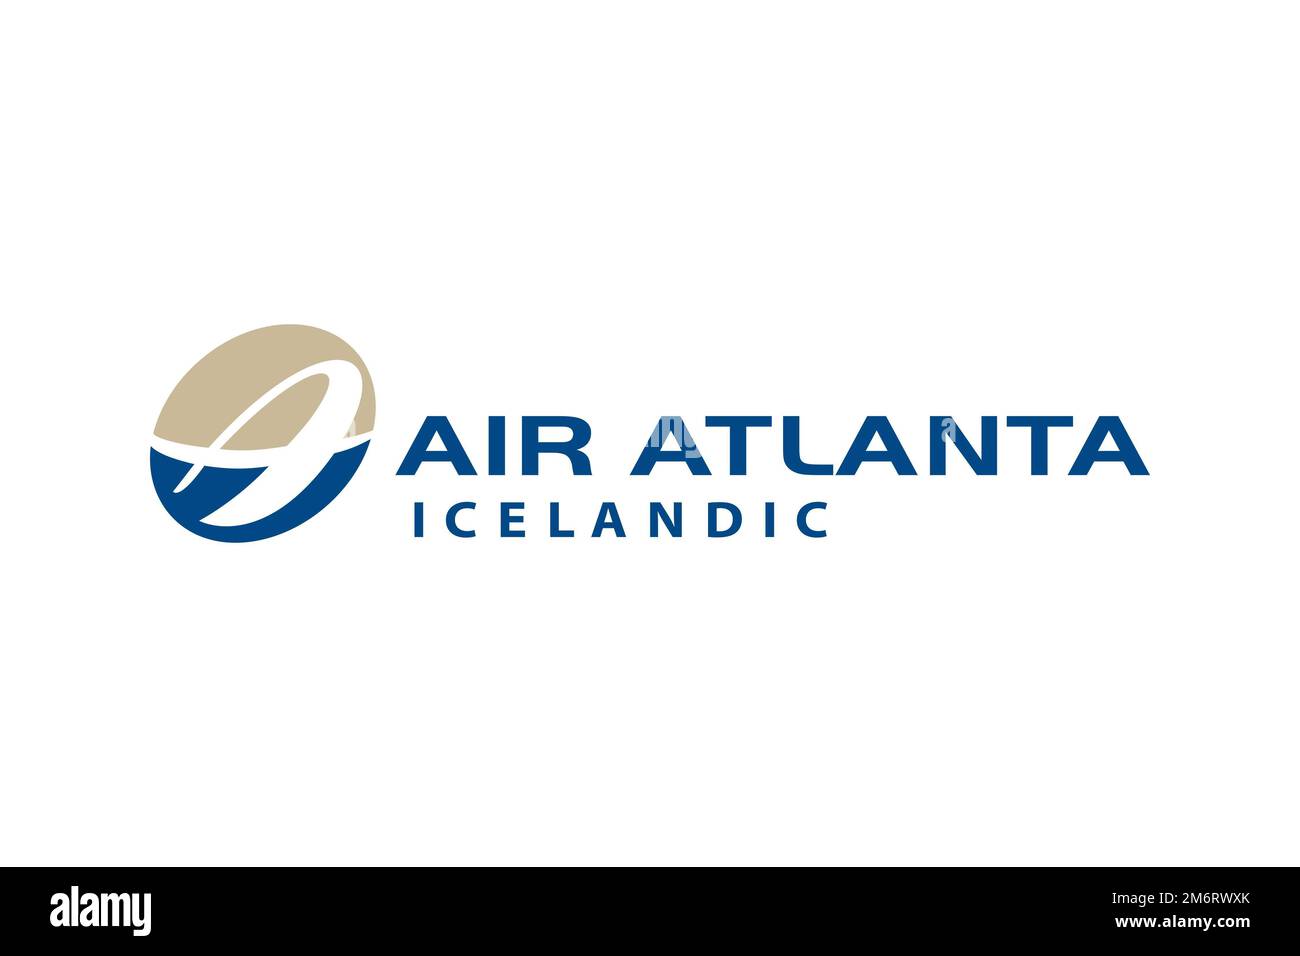 Air Atlanta islandese, logo, sfondo bianco Foto Stock